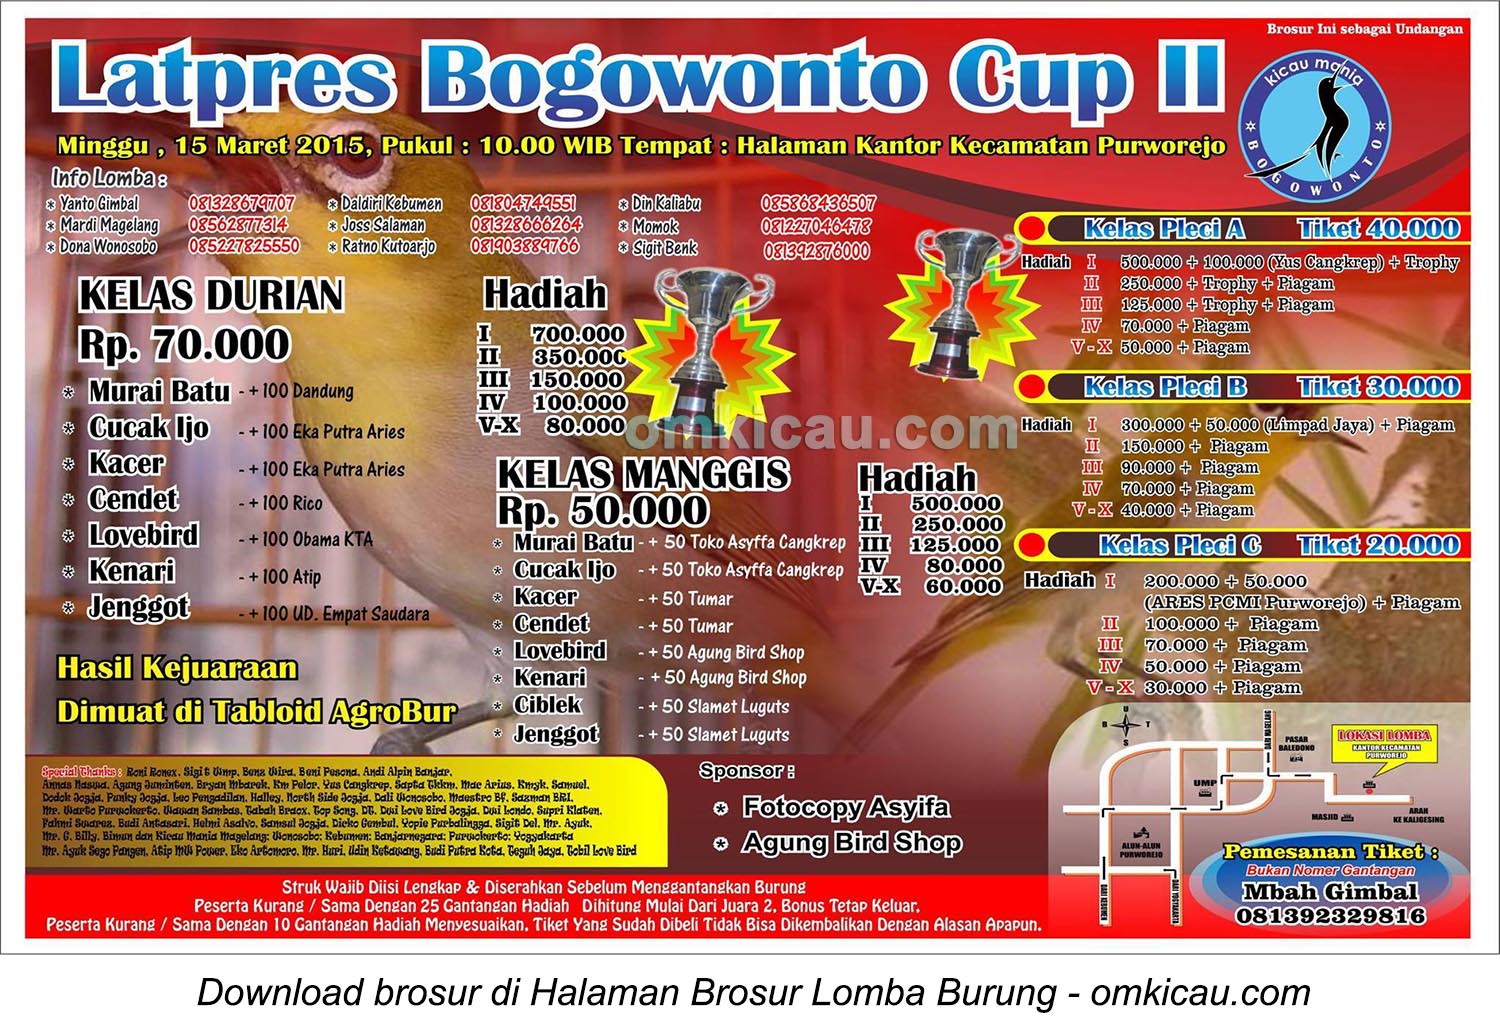 Brosur Latpres Burung Berkicau Bogowonto Cup II, Purworejo, 15 Maret 2015